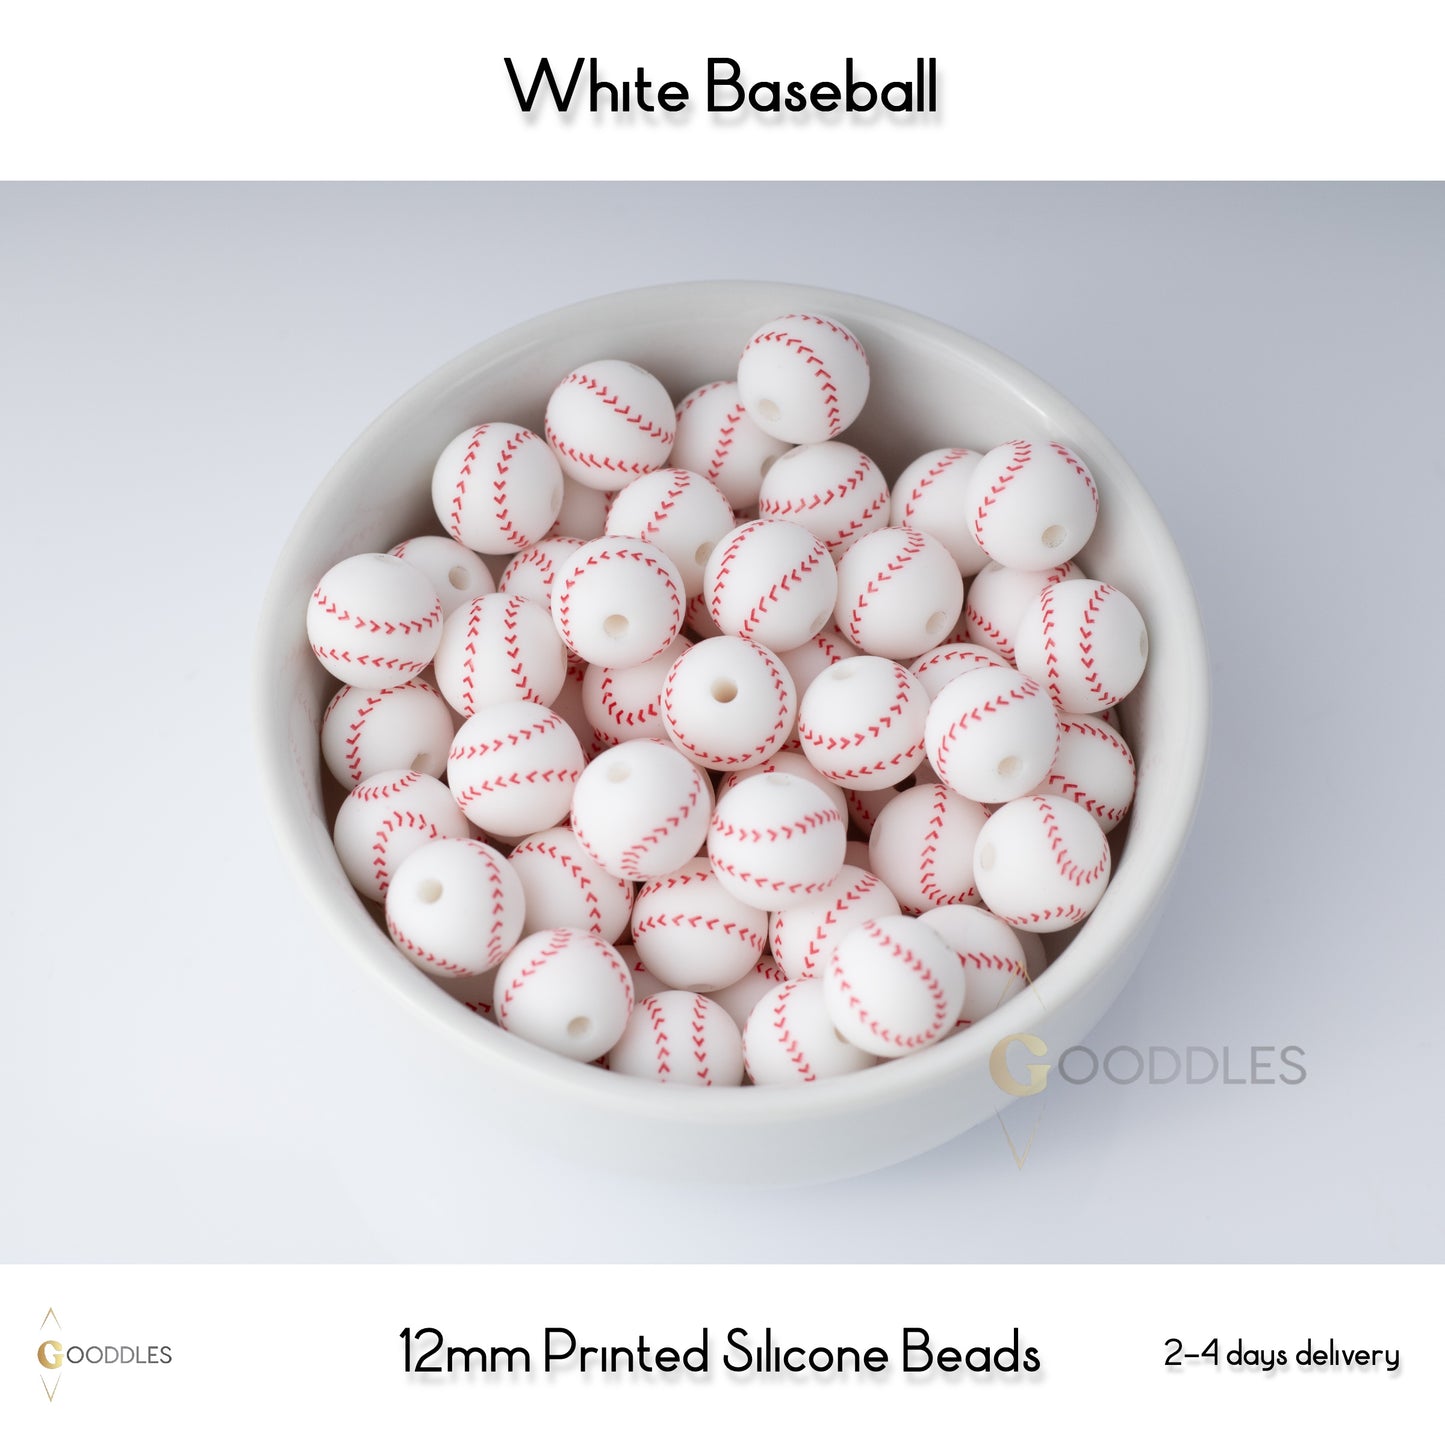 5pcs, White Baseball Silicone Beads Printed Round Silicone Beads